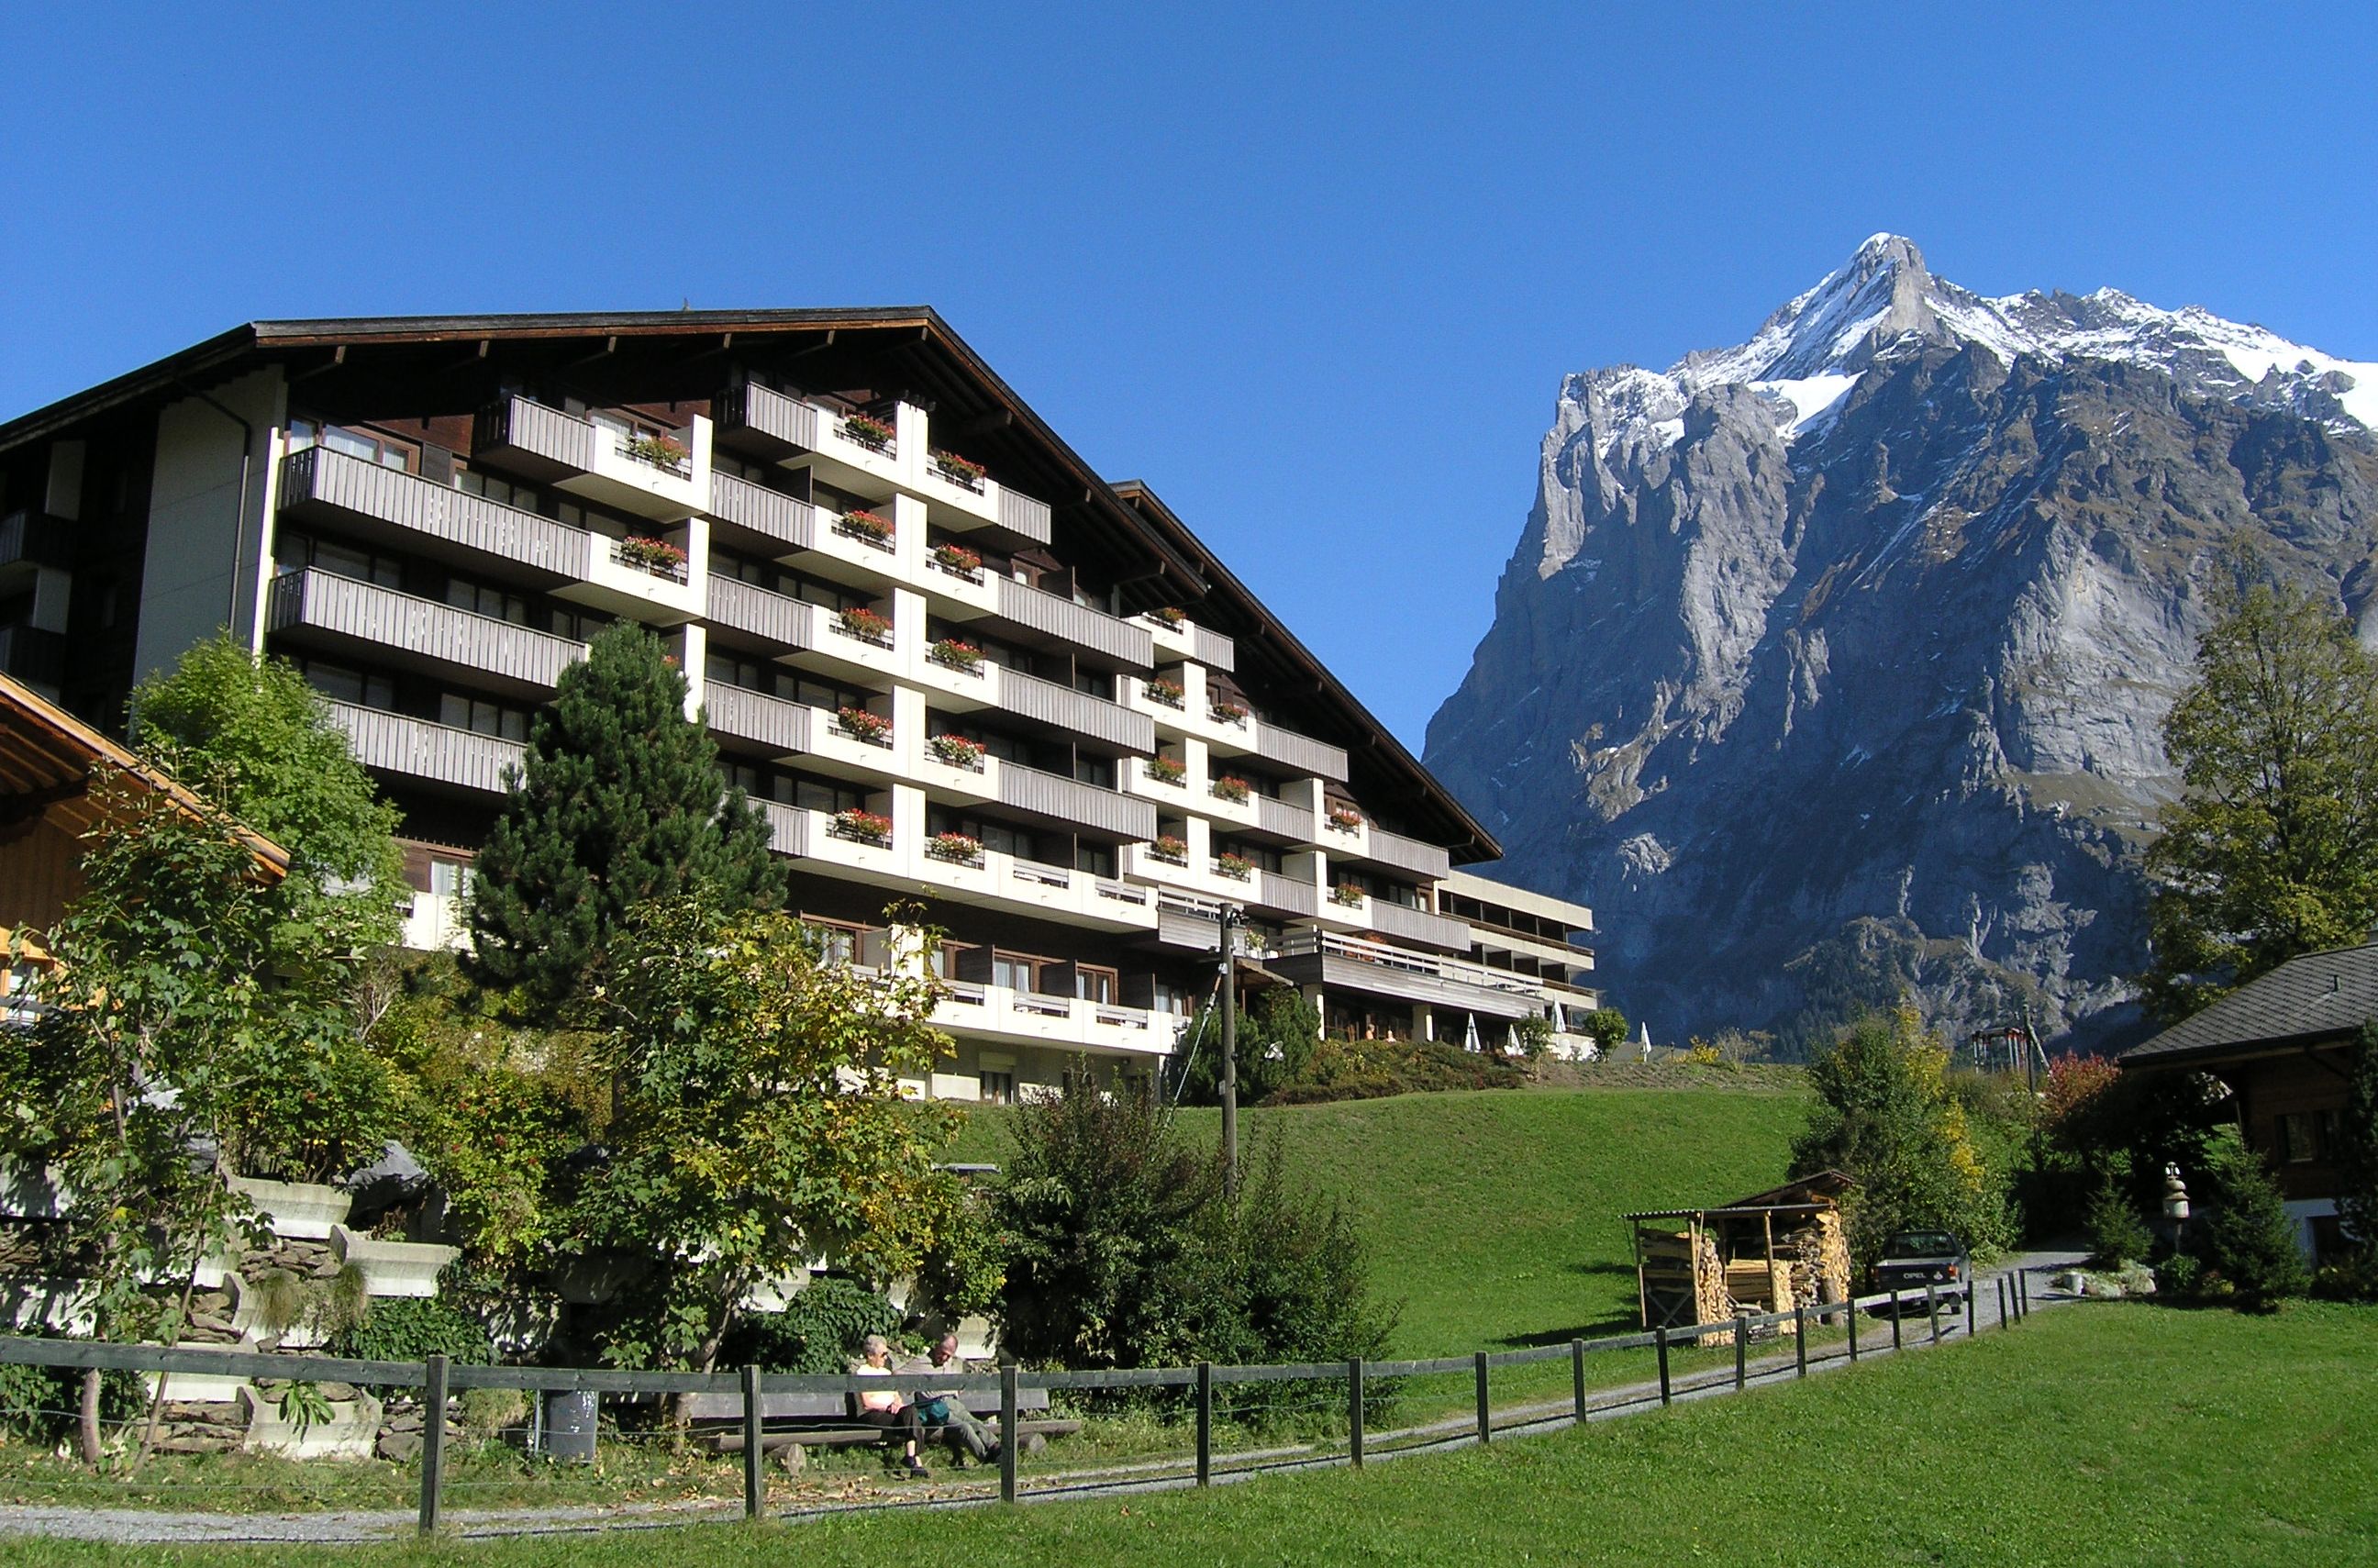 swisshoteldata.ch - Swiss hotel directory